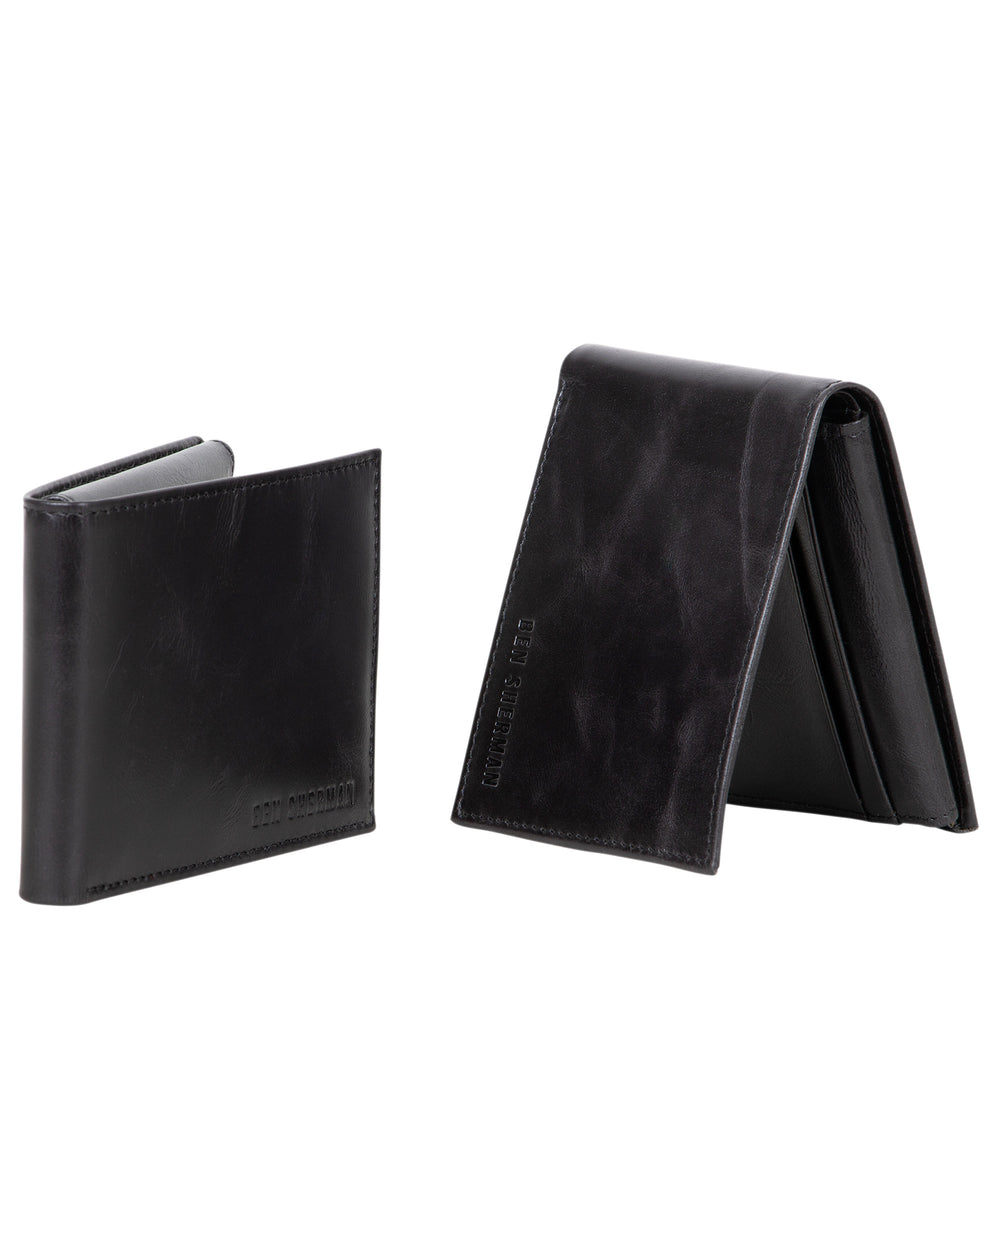 Romford Crunch Leather Billfold Wallet - Black